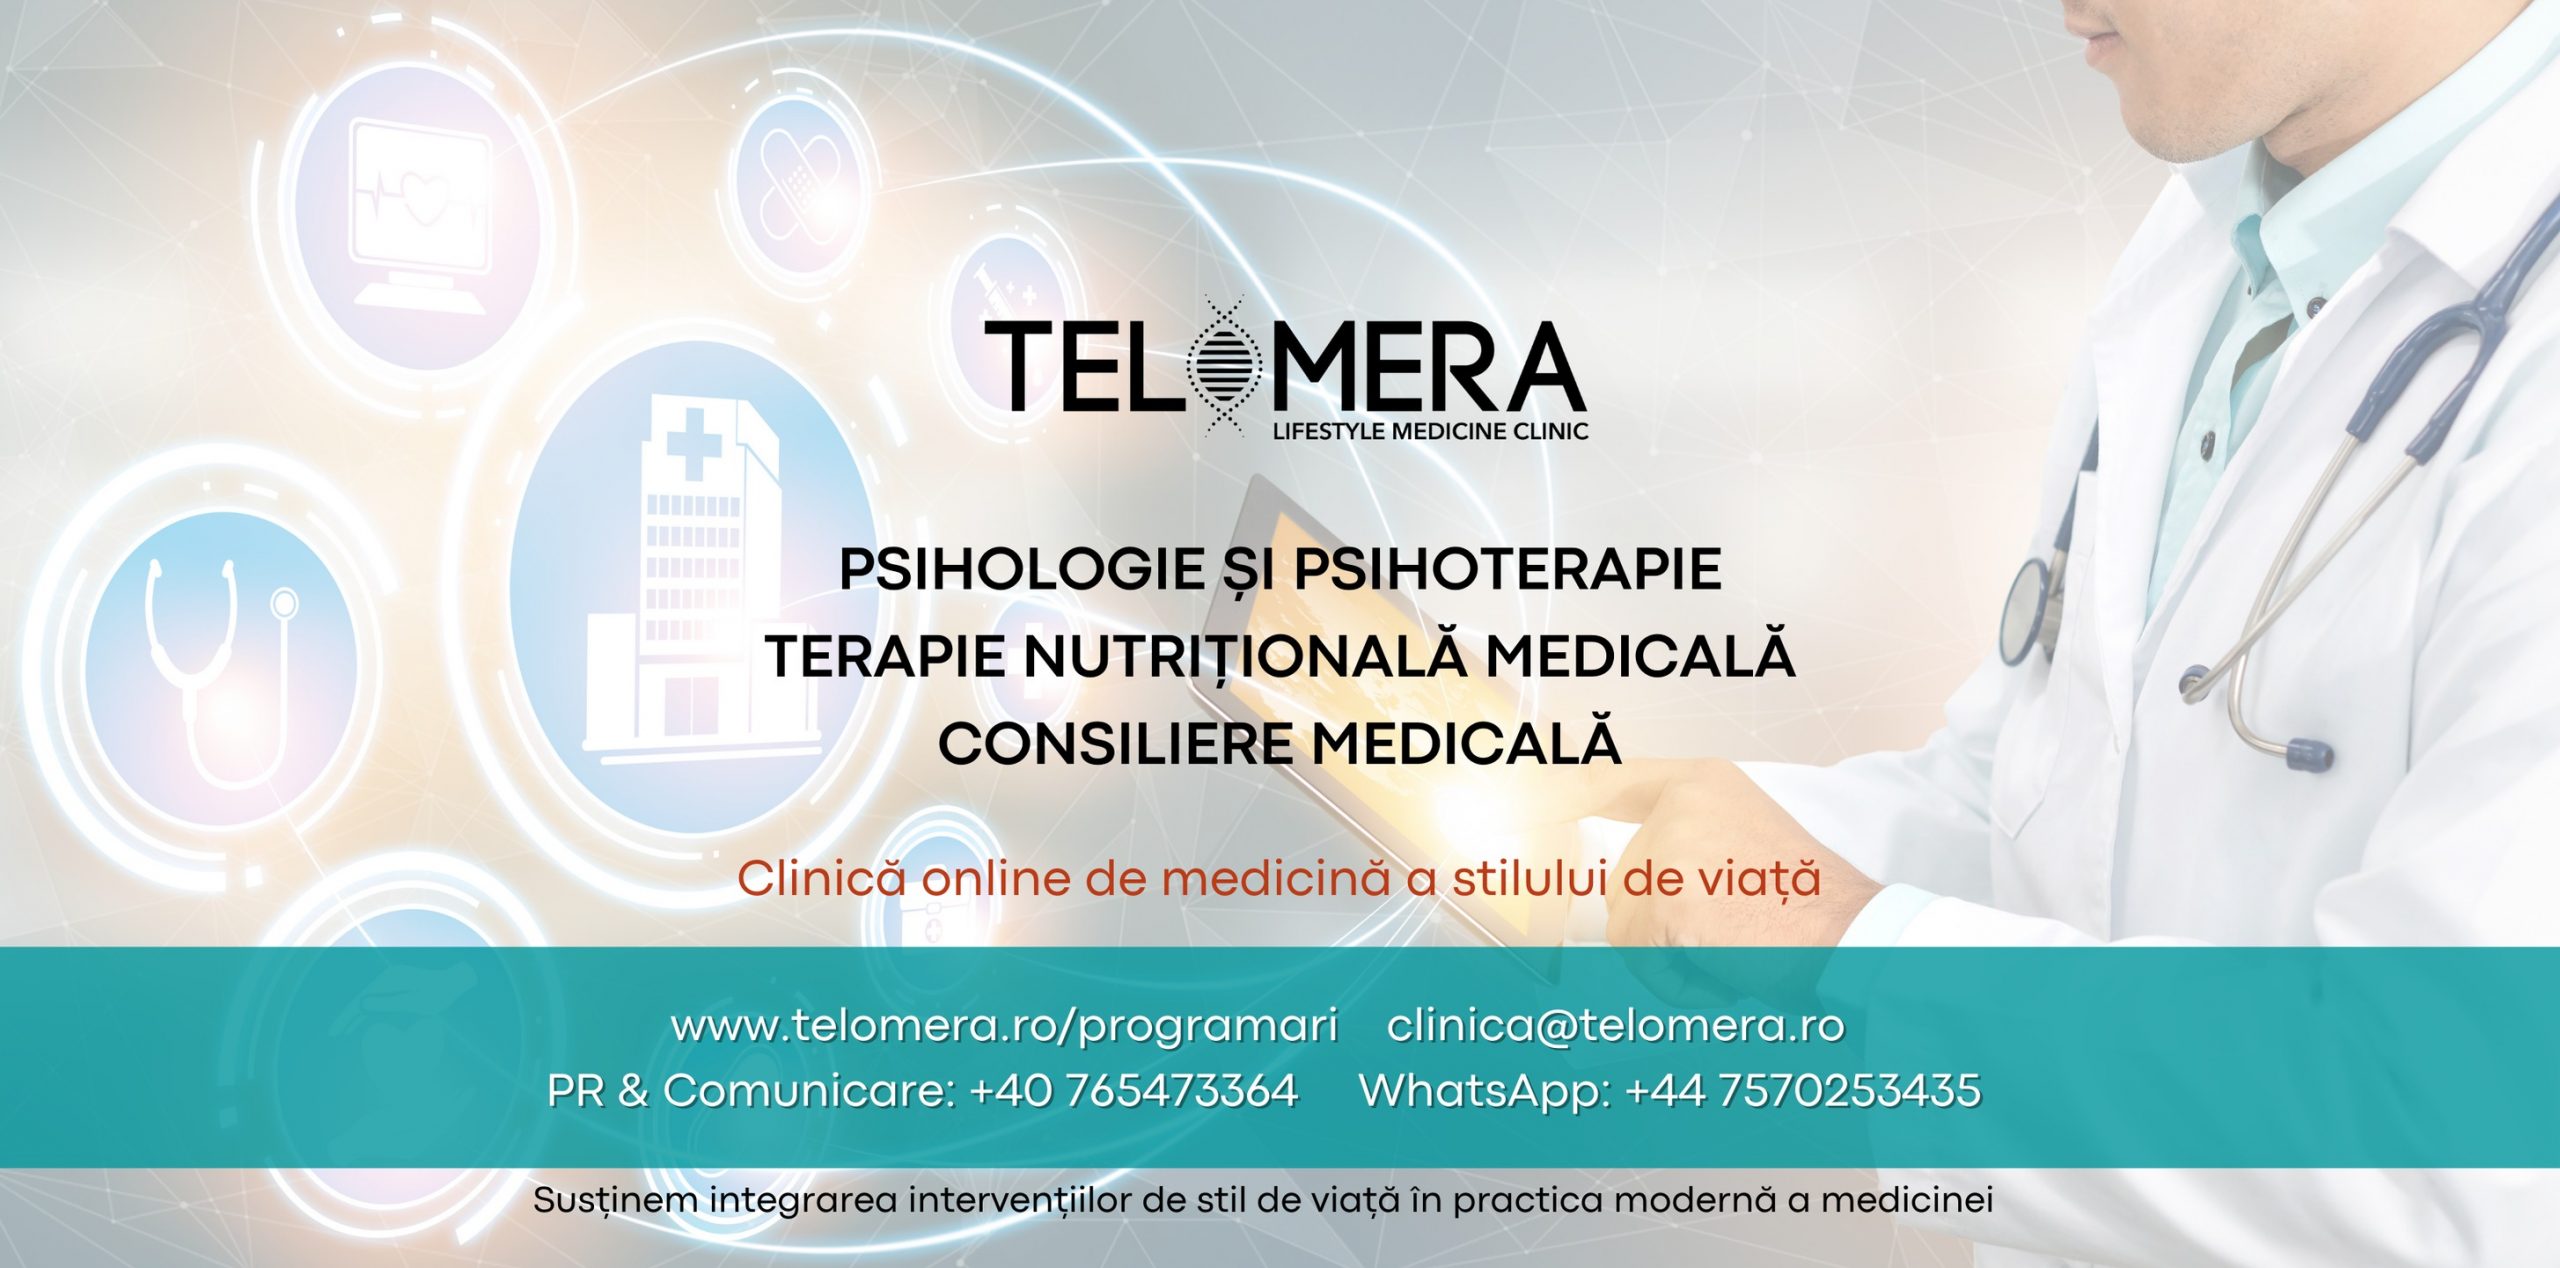 Telomera Lifestyle Medicine Clinic